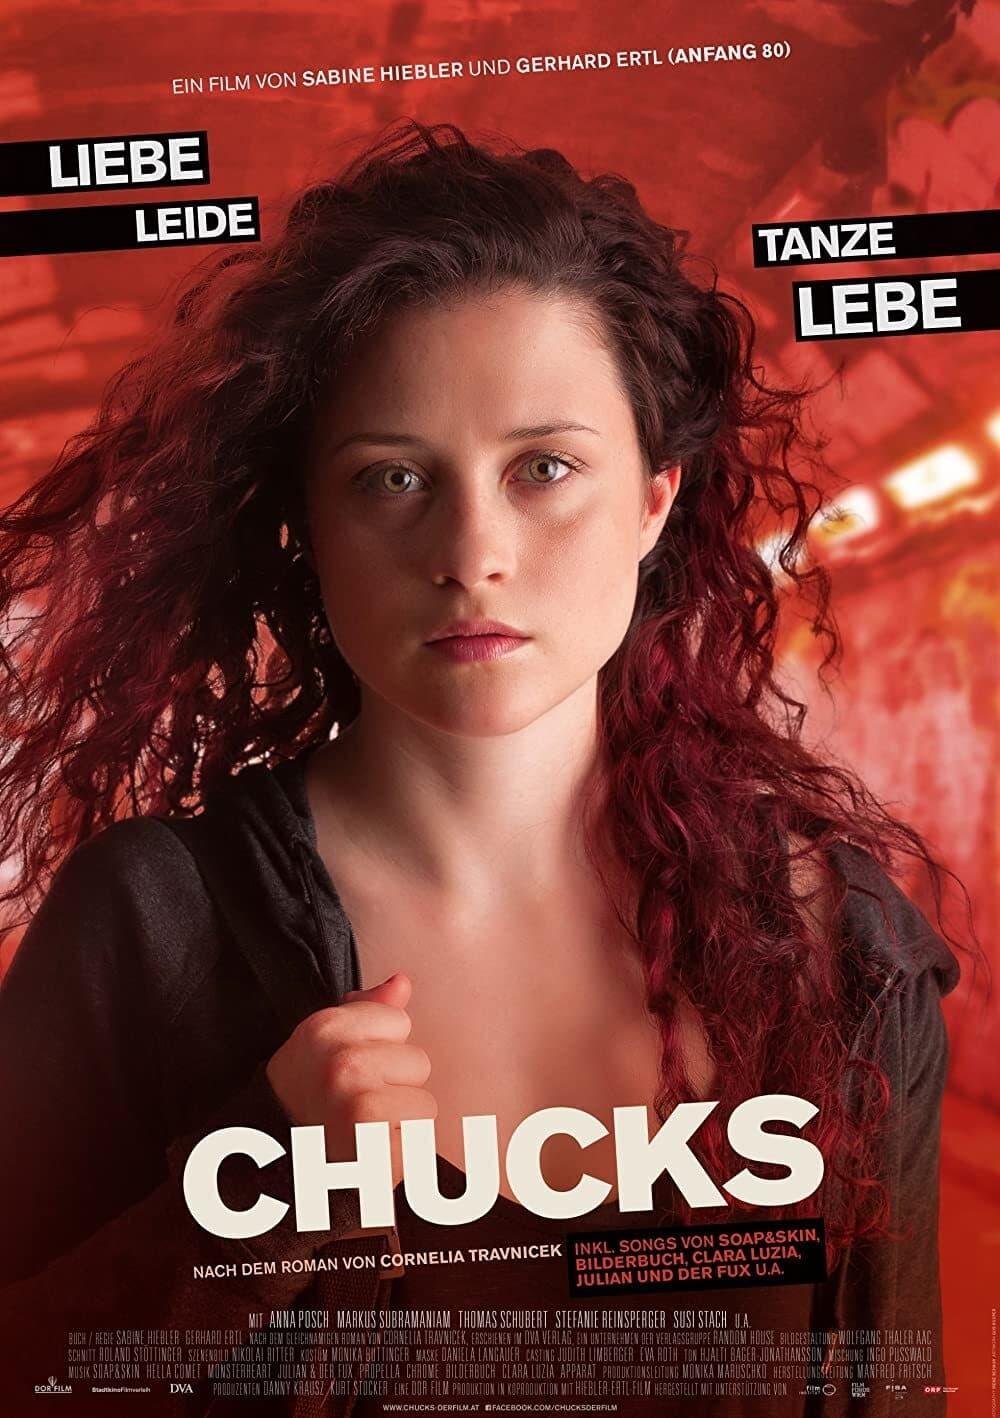 Chucks poster